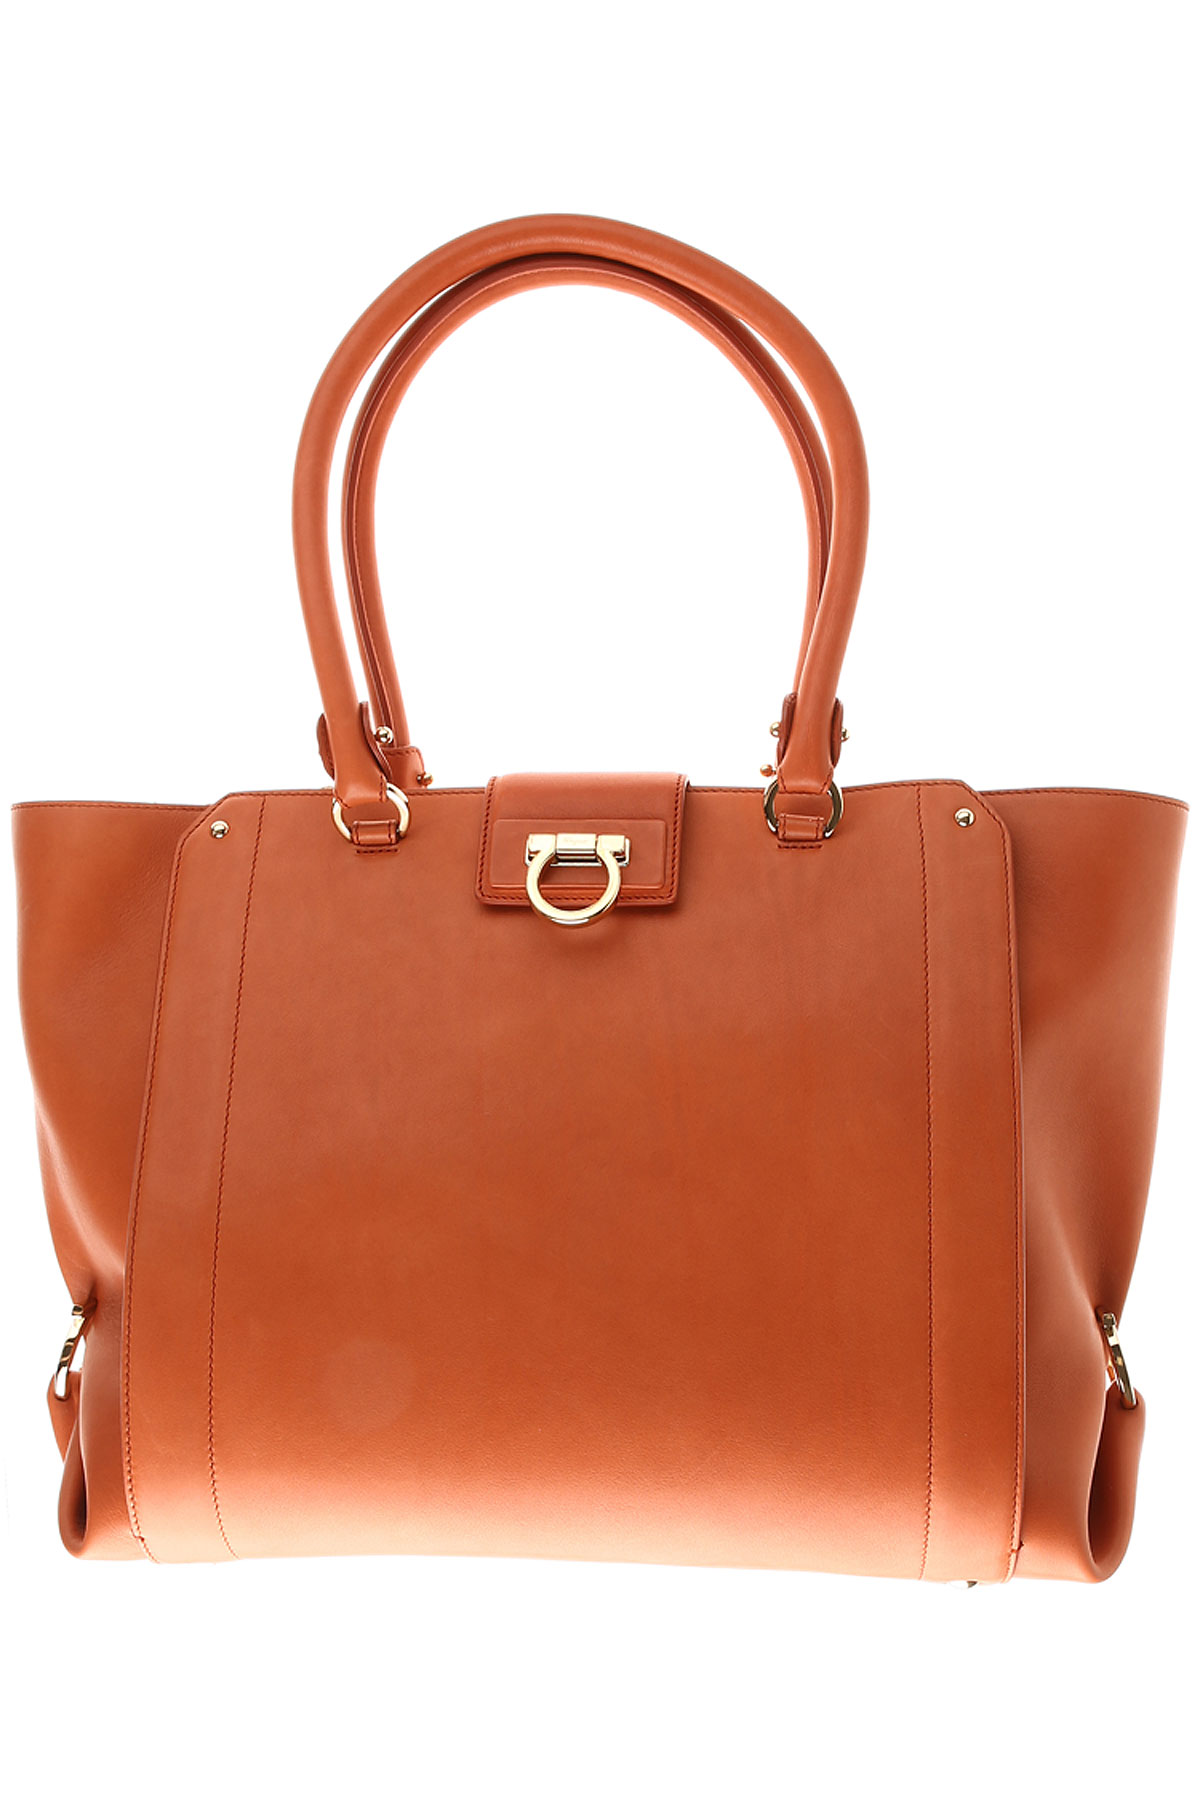 Handbags Salvatore Ferragamo, Style code: 661530-21g187-luisa